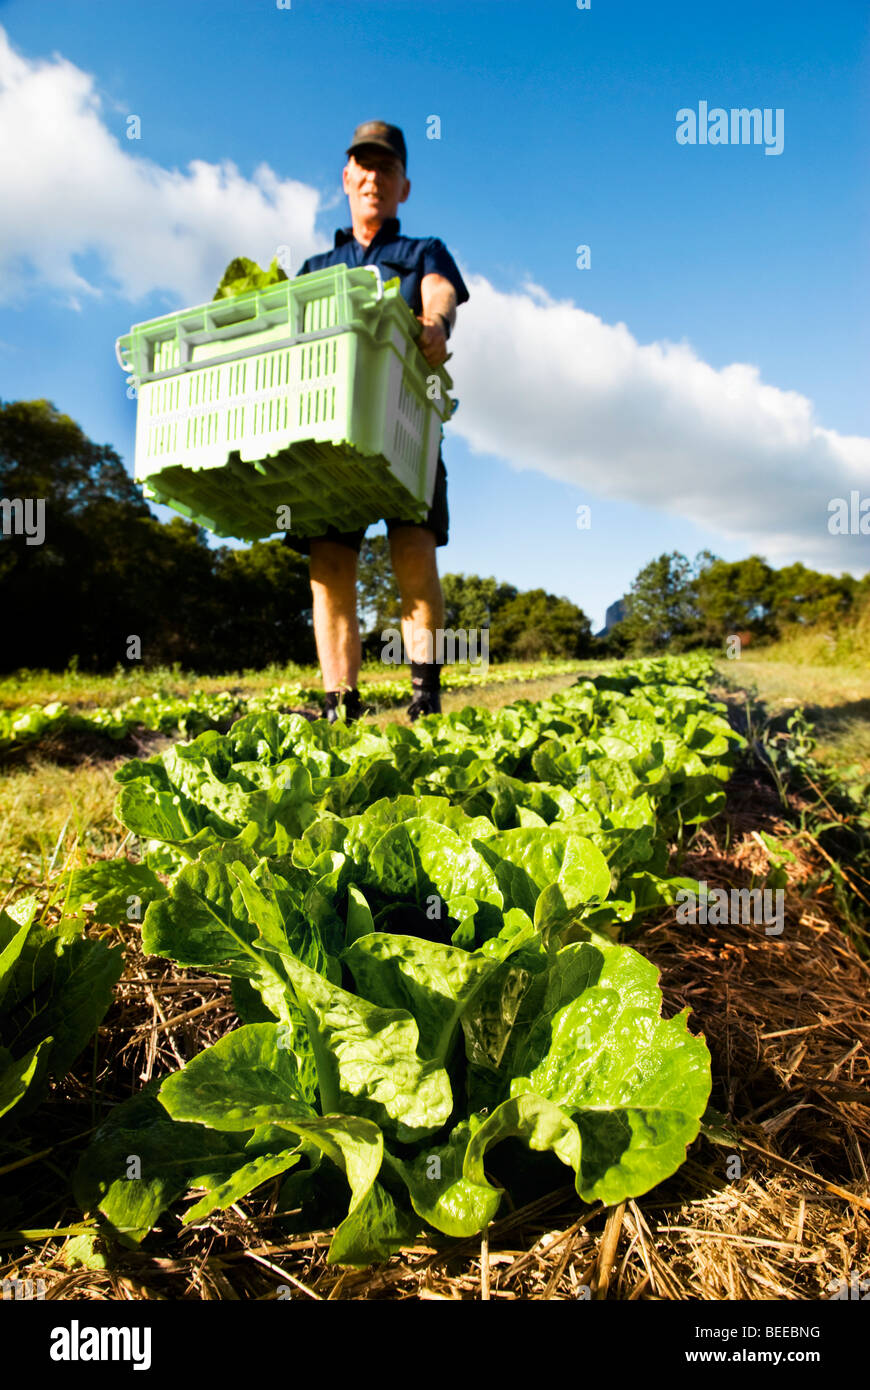 Harvesting lettuce - Certified Organic Producer Stock Photo